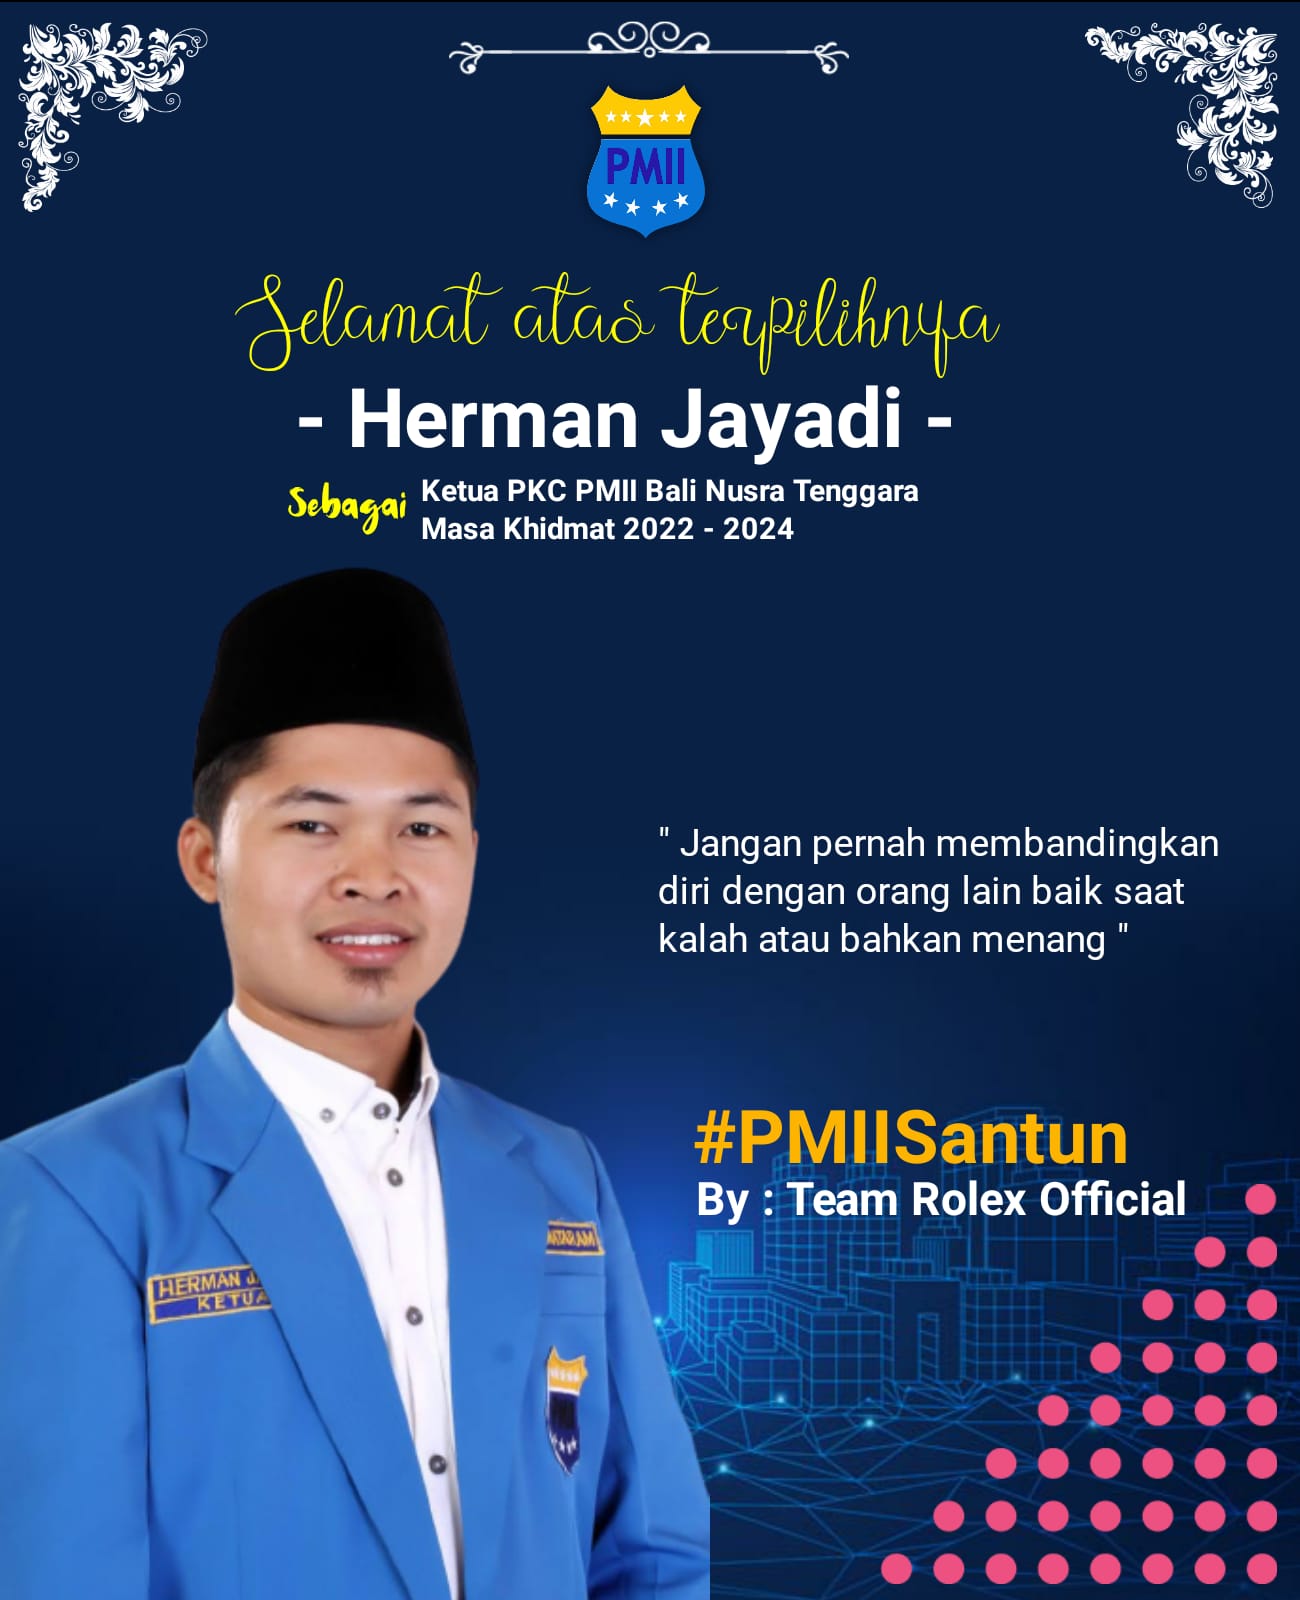 Herman Jayadi Terpilih Sebagai Ketua PKC PMII Bali-Nusra, Ini Profilnya